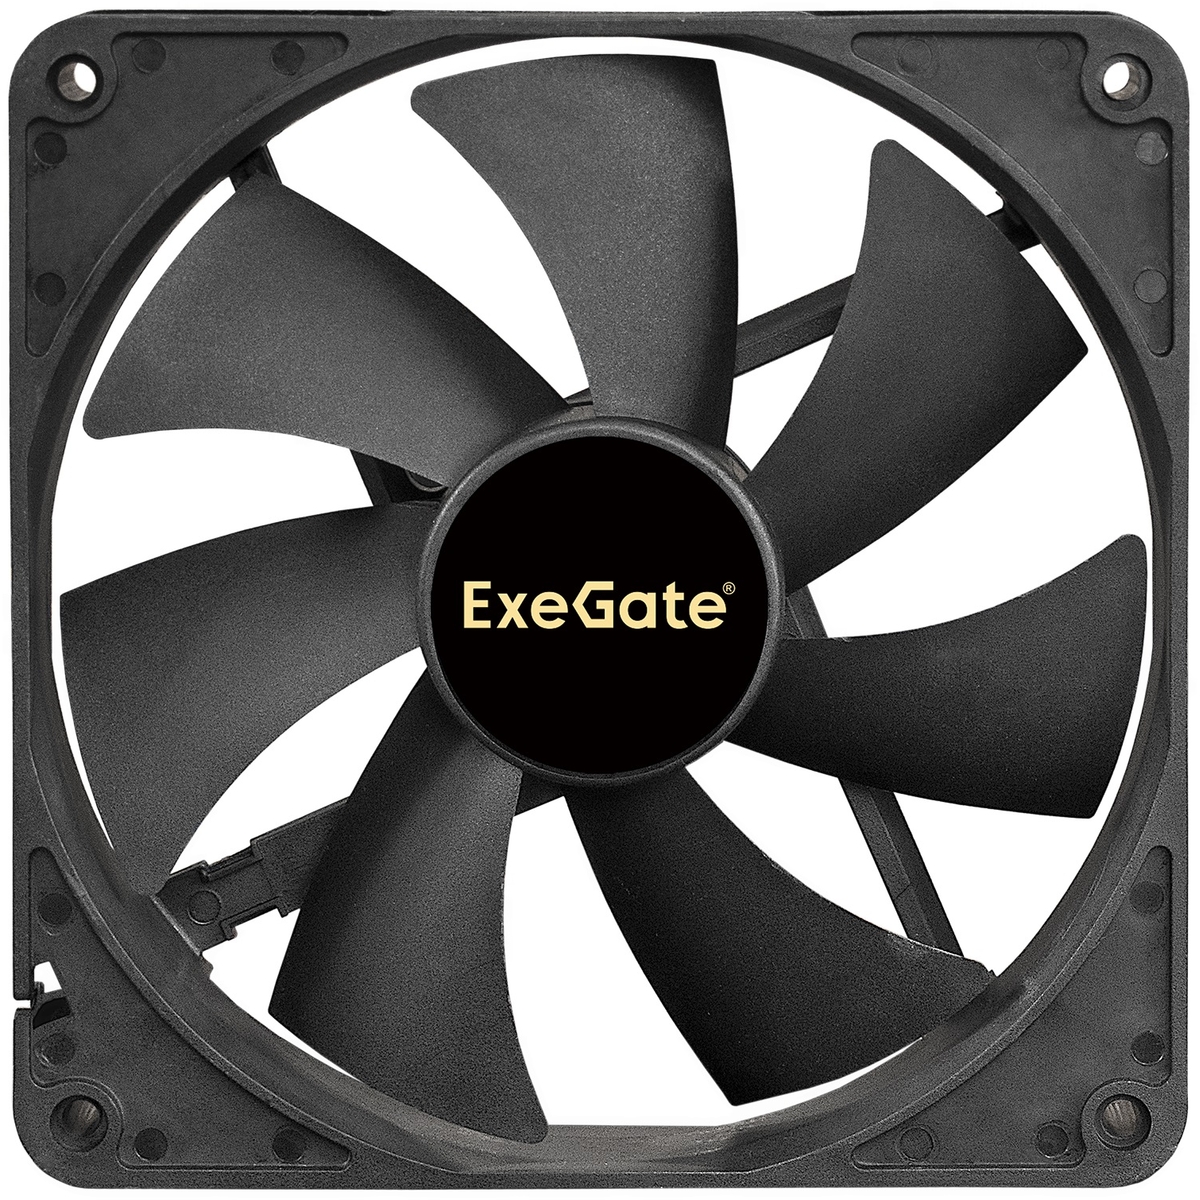 Cooler ExeGate EX14025B4P-PWM